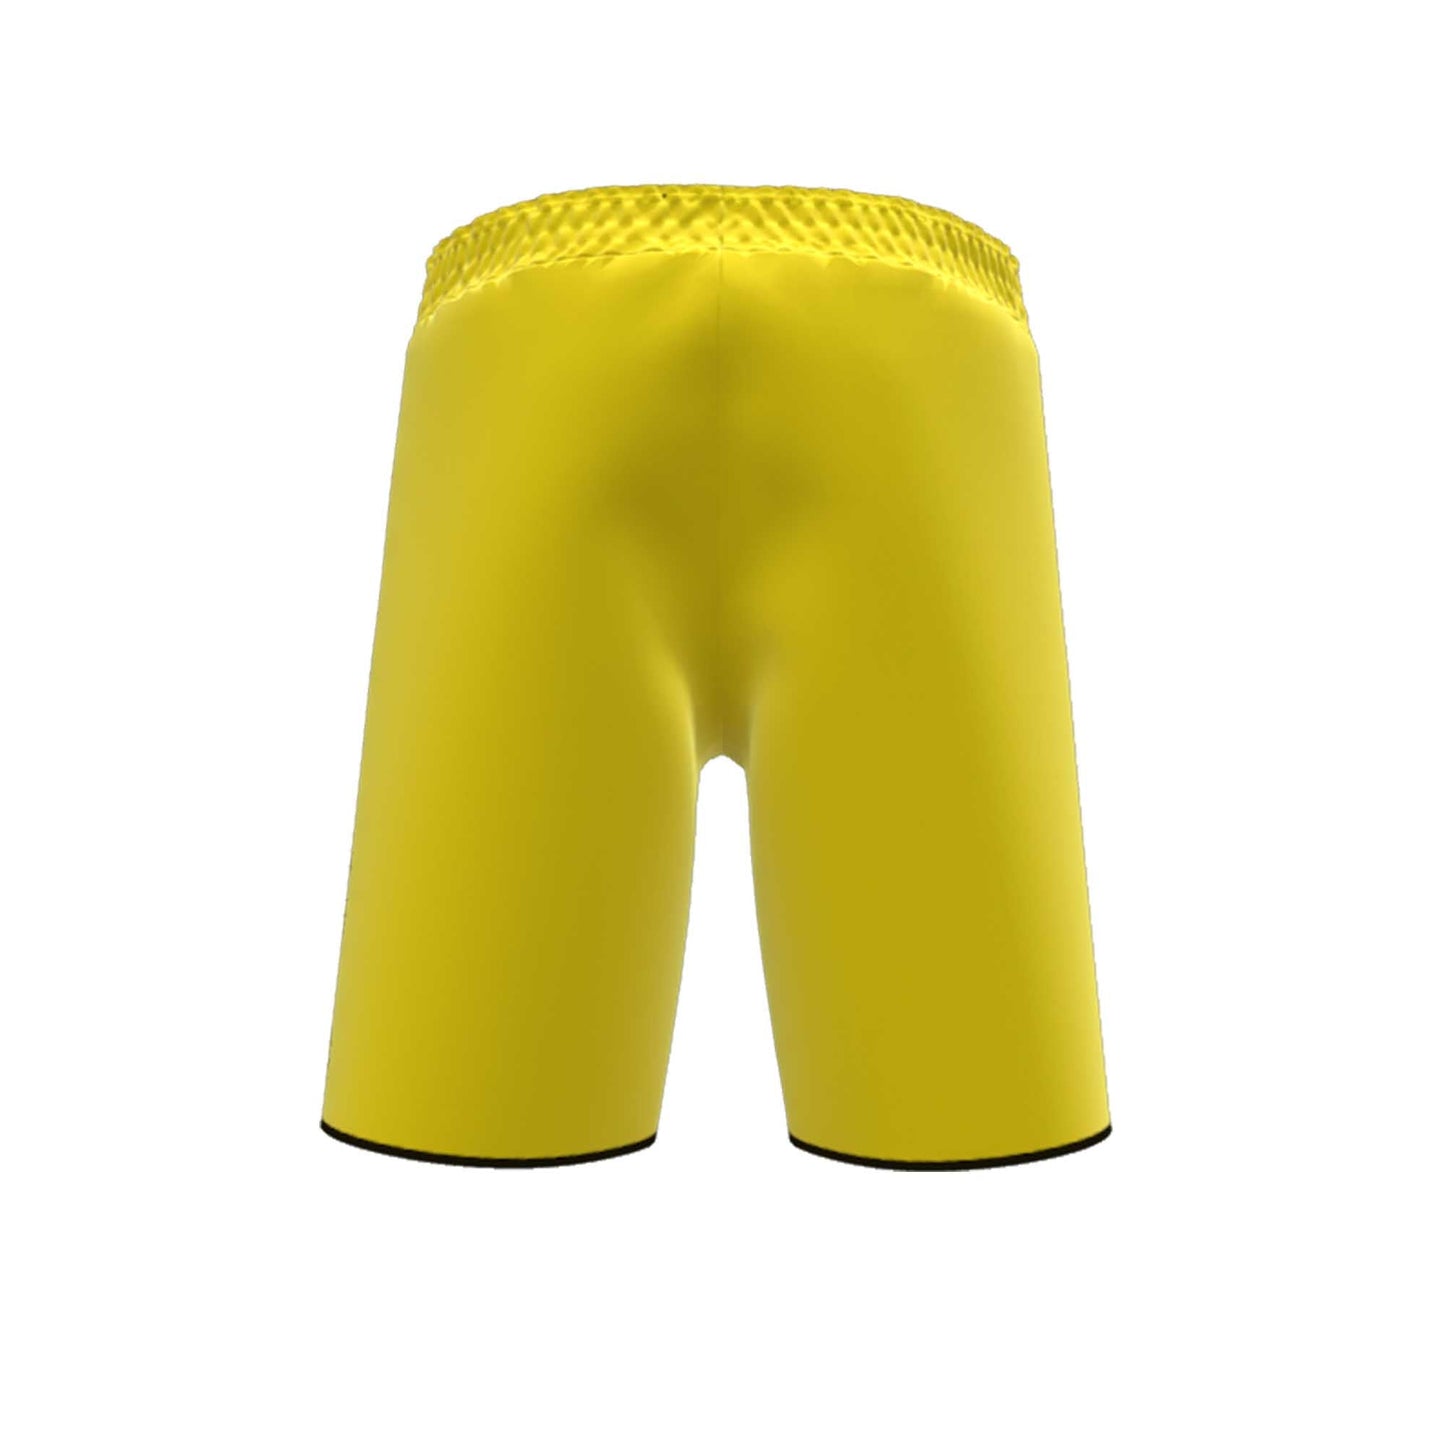 Wellington Phoenix A-League Replica Yellow Shorts - Kids